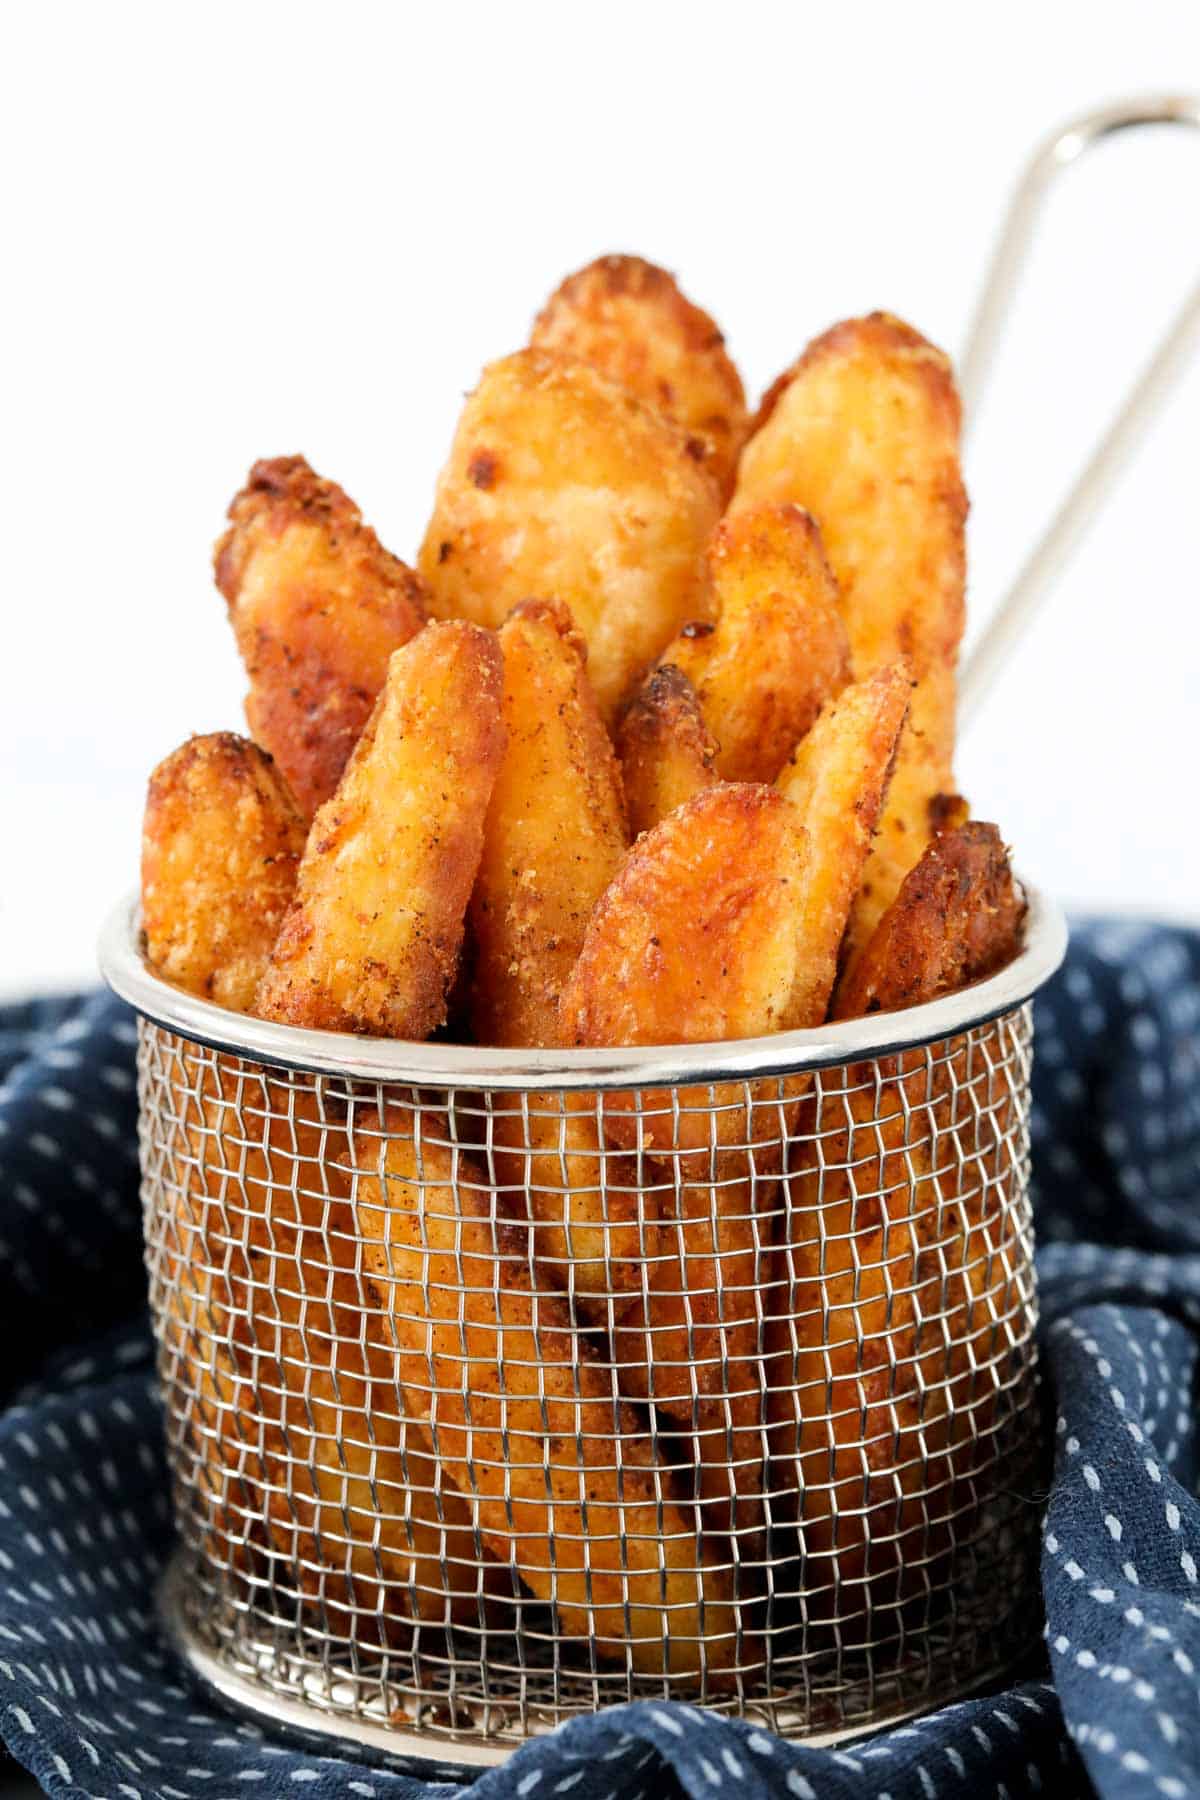 A silver basket holding crunchy potato wedges.